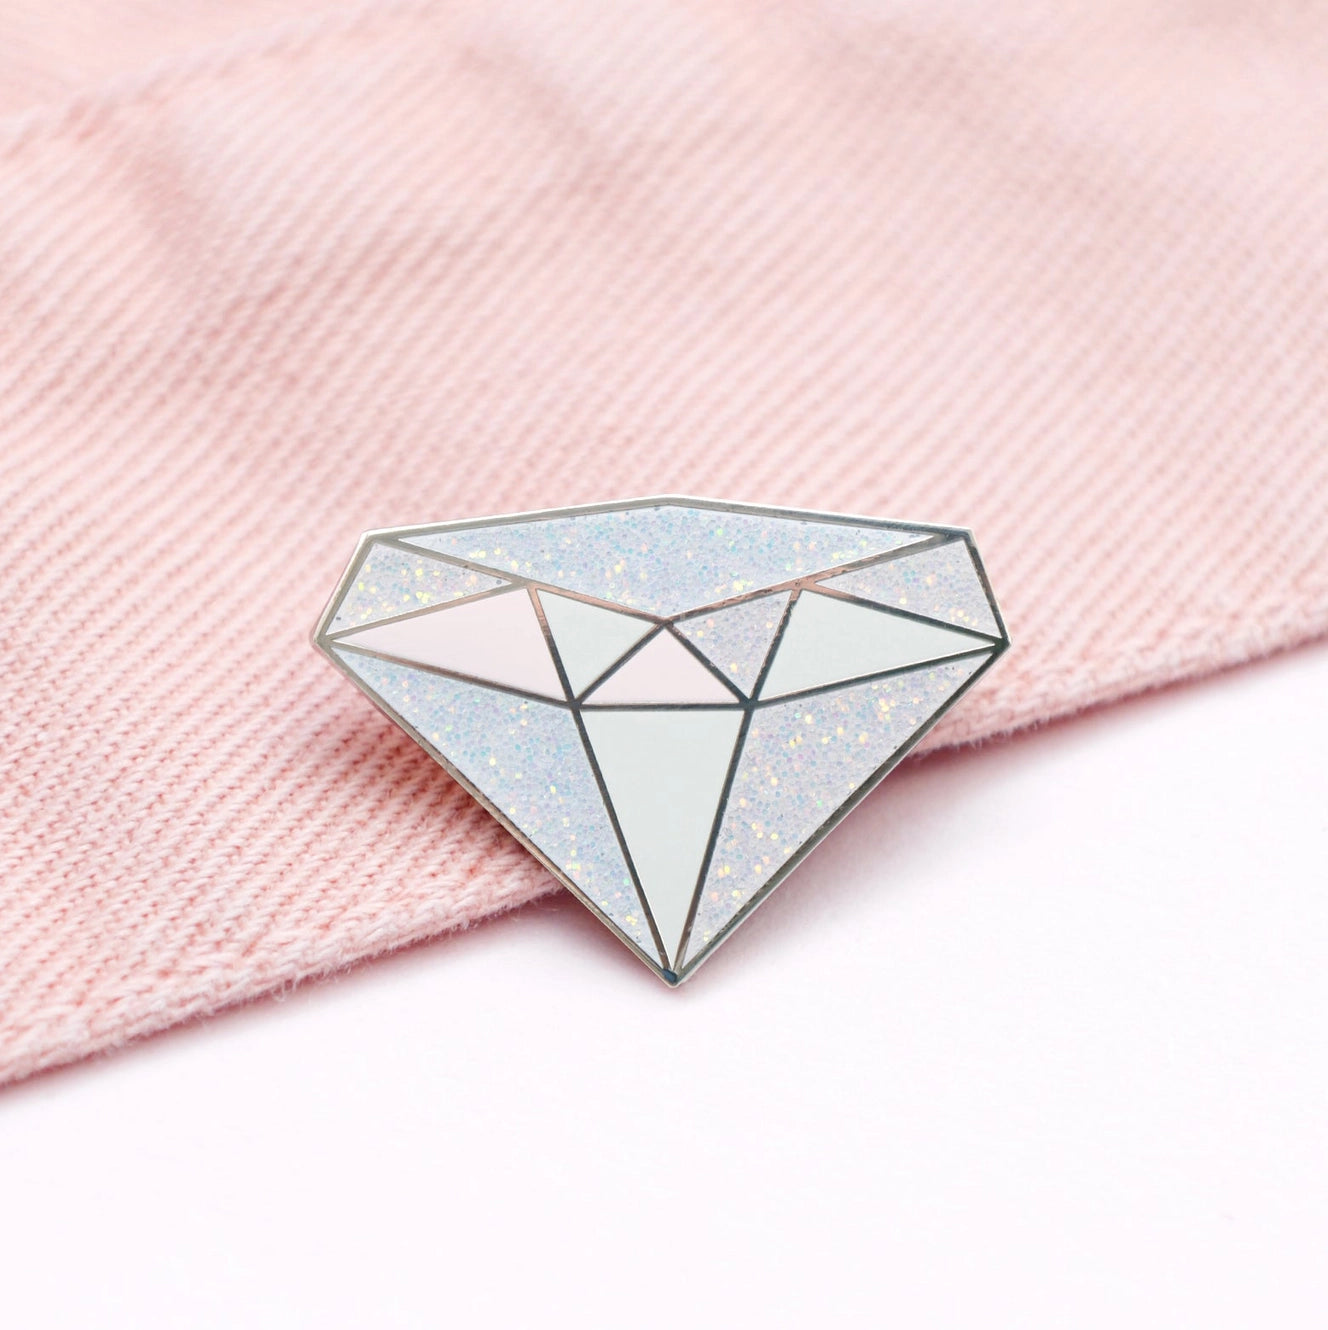 Enamel Pin - You’re A Gem Diamond Gemstone